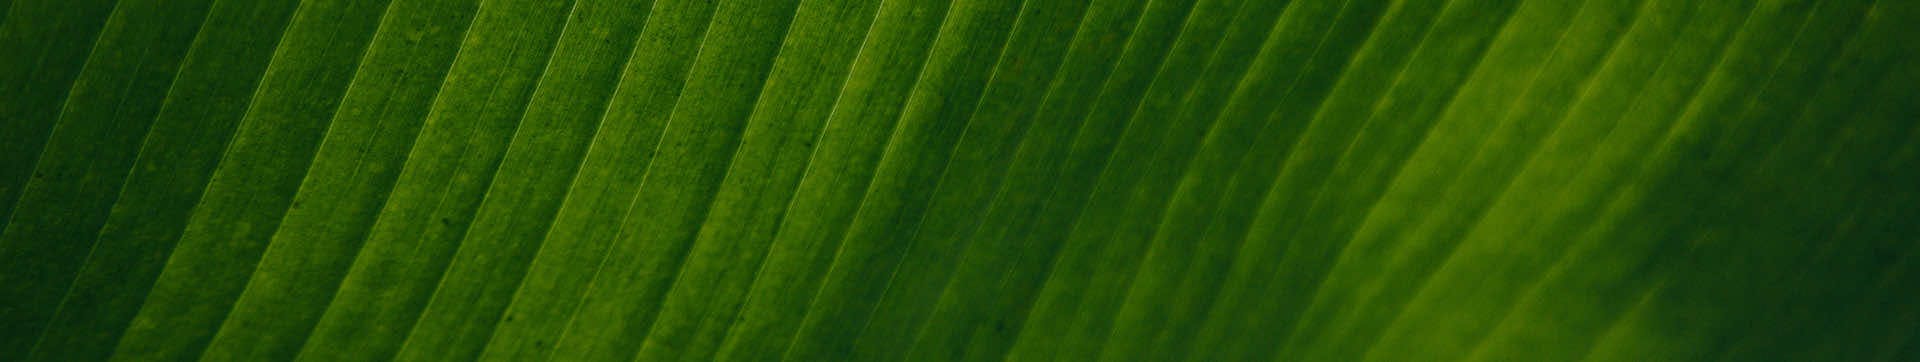 Close-up of a leaf, background image